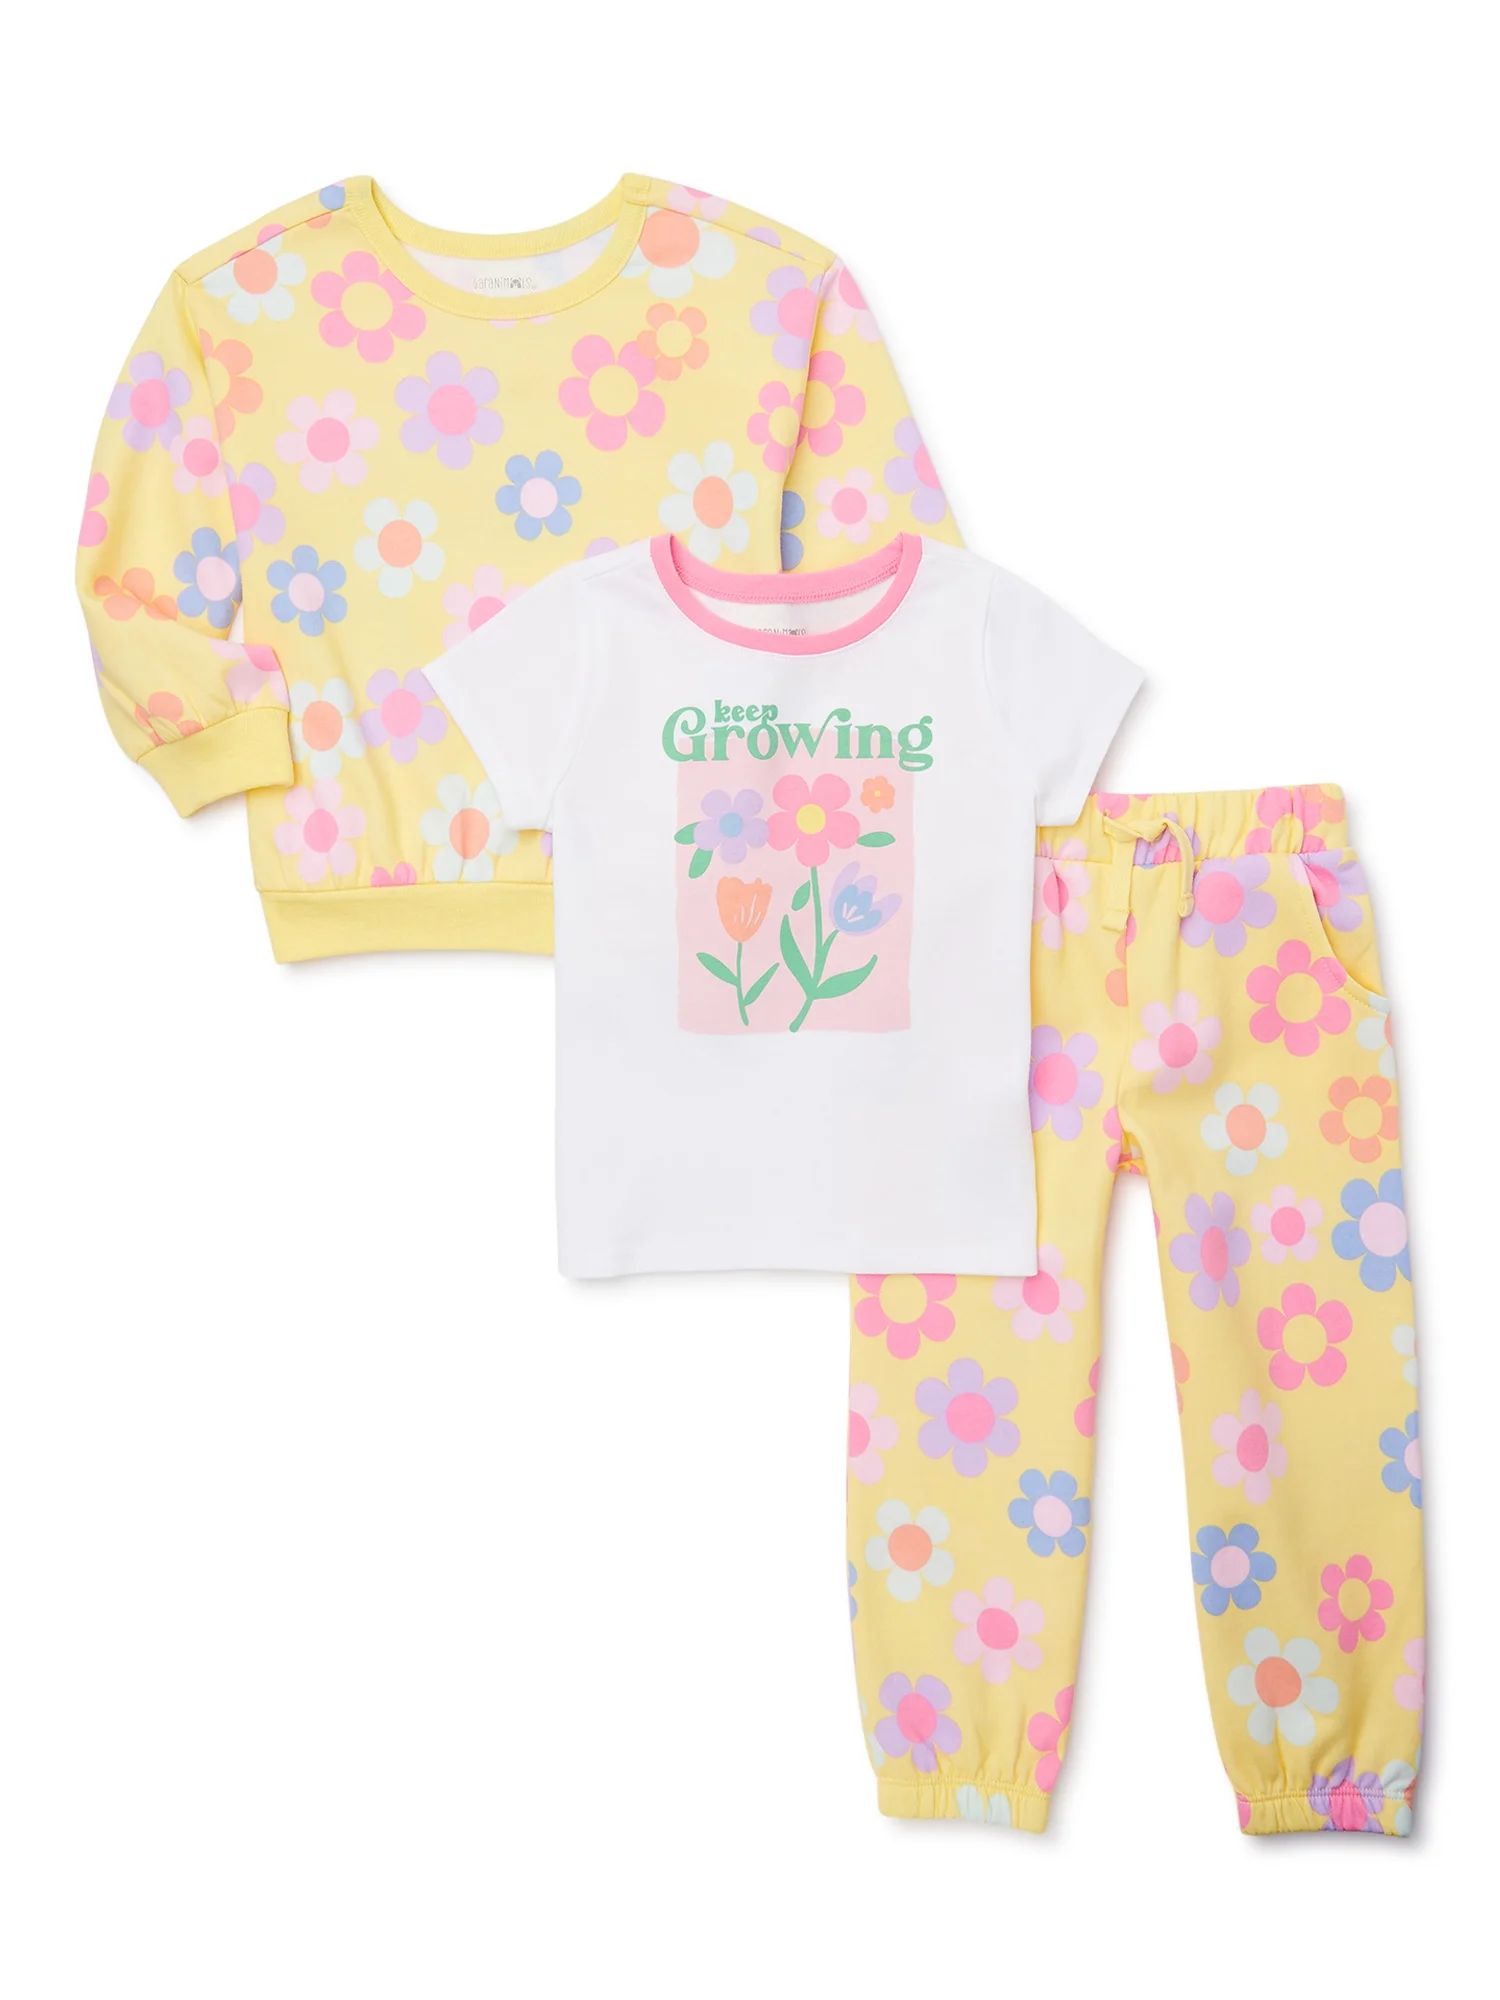 Garanimals Toddler Girls Fleece Outfit Set, 3-Piece, Sizes 18M-5T | Walmart (US)